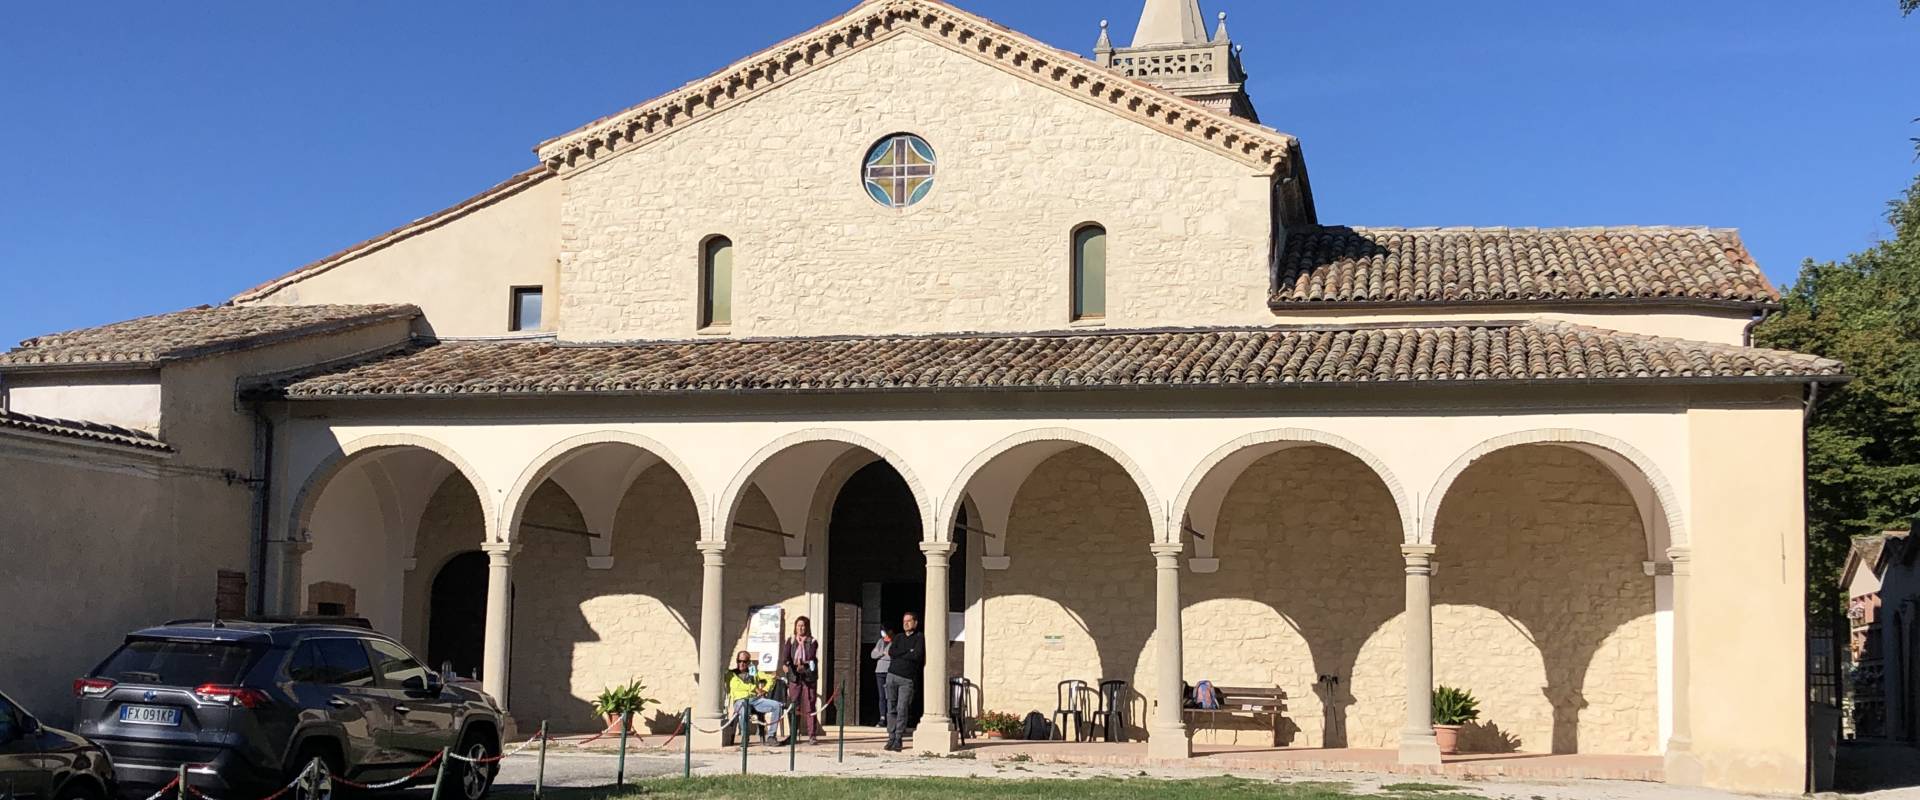 Monastery of Sant'Antonio Abate in Montemaggio photo by Francesca Pasqualetti